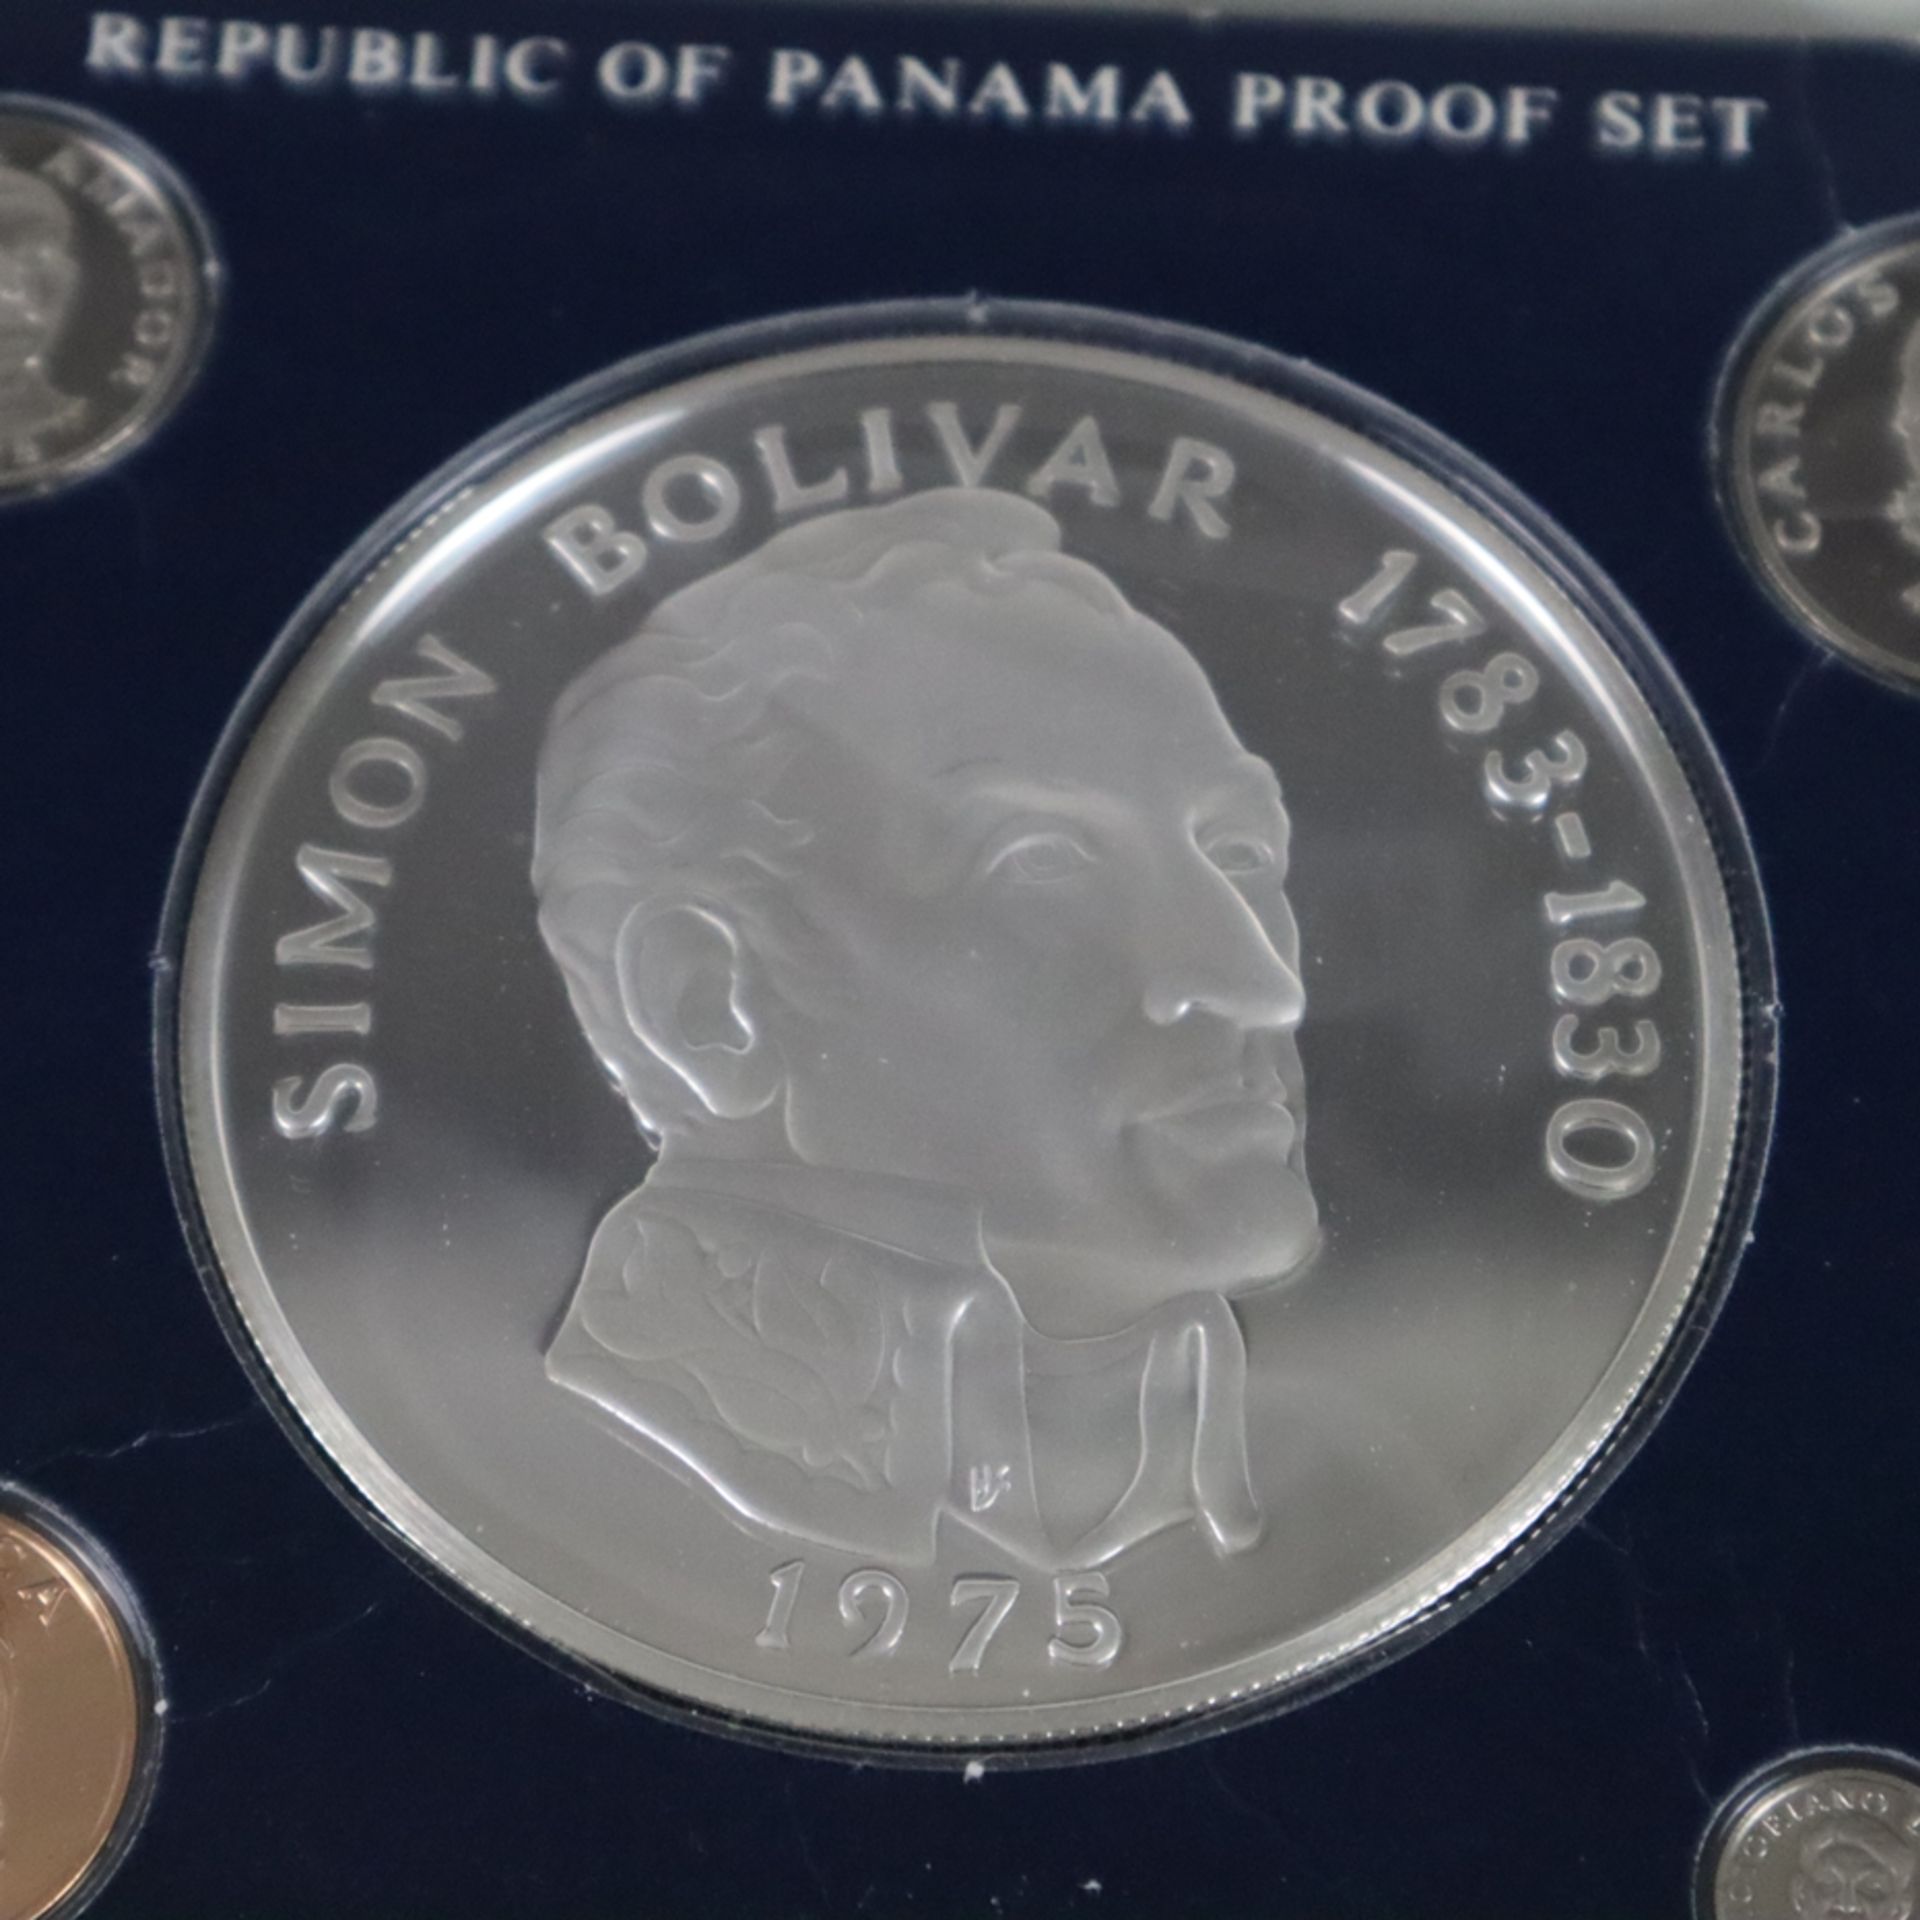 Münzset Republik of Panama 1975 - 925er Silber, Republik Of Panama Proof Set, Franklin Mint, 9 Münz - Bild 2 aus 5